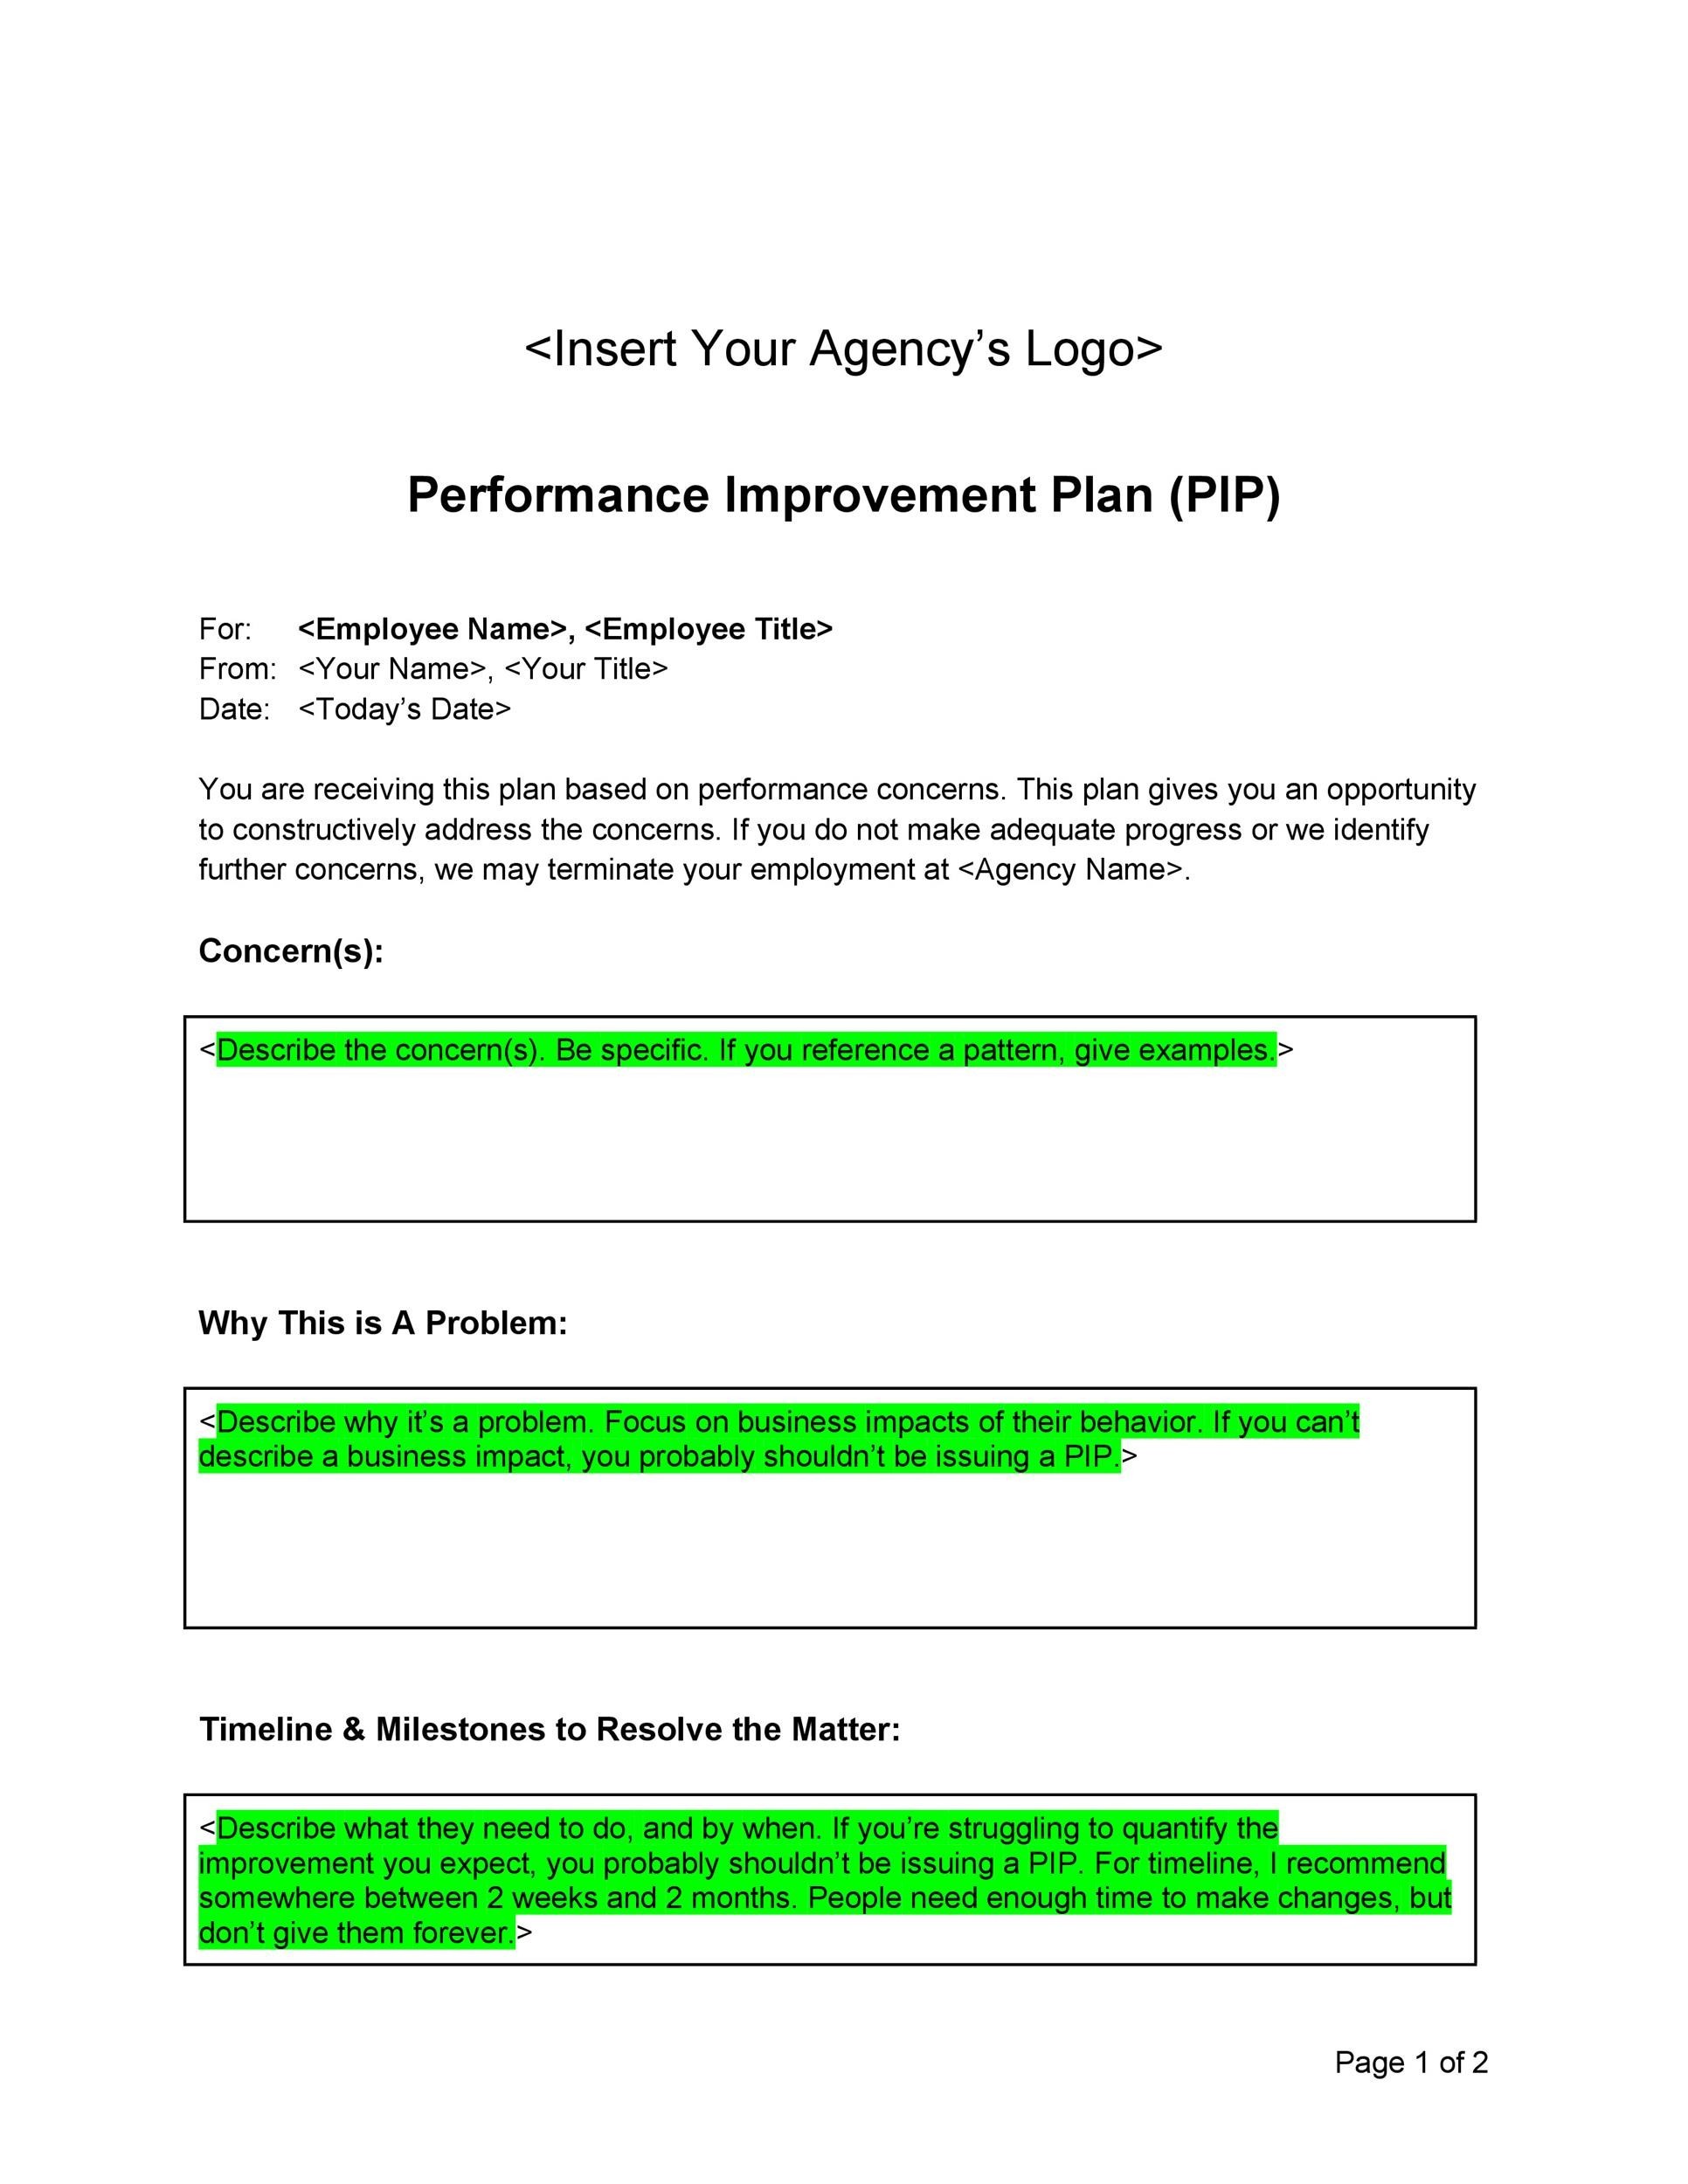 40+ Performance Improvement Plan Templates & Examples